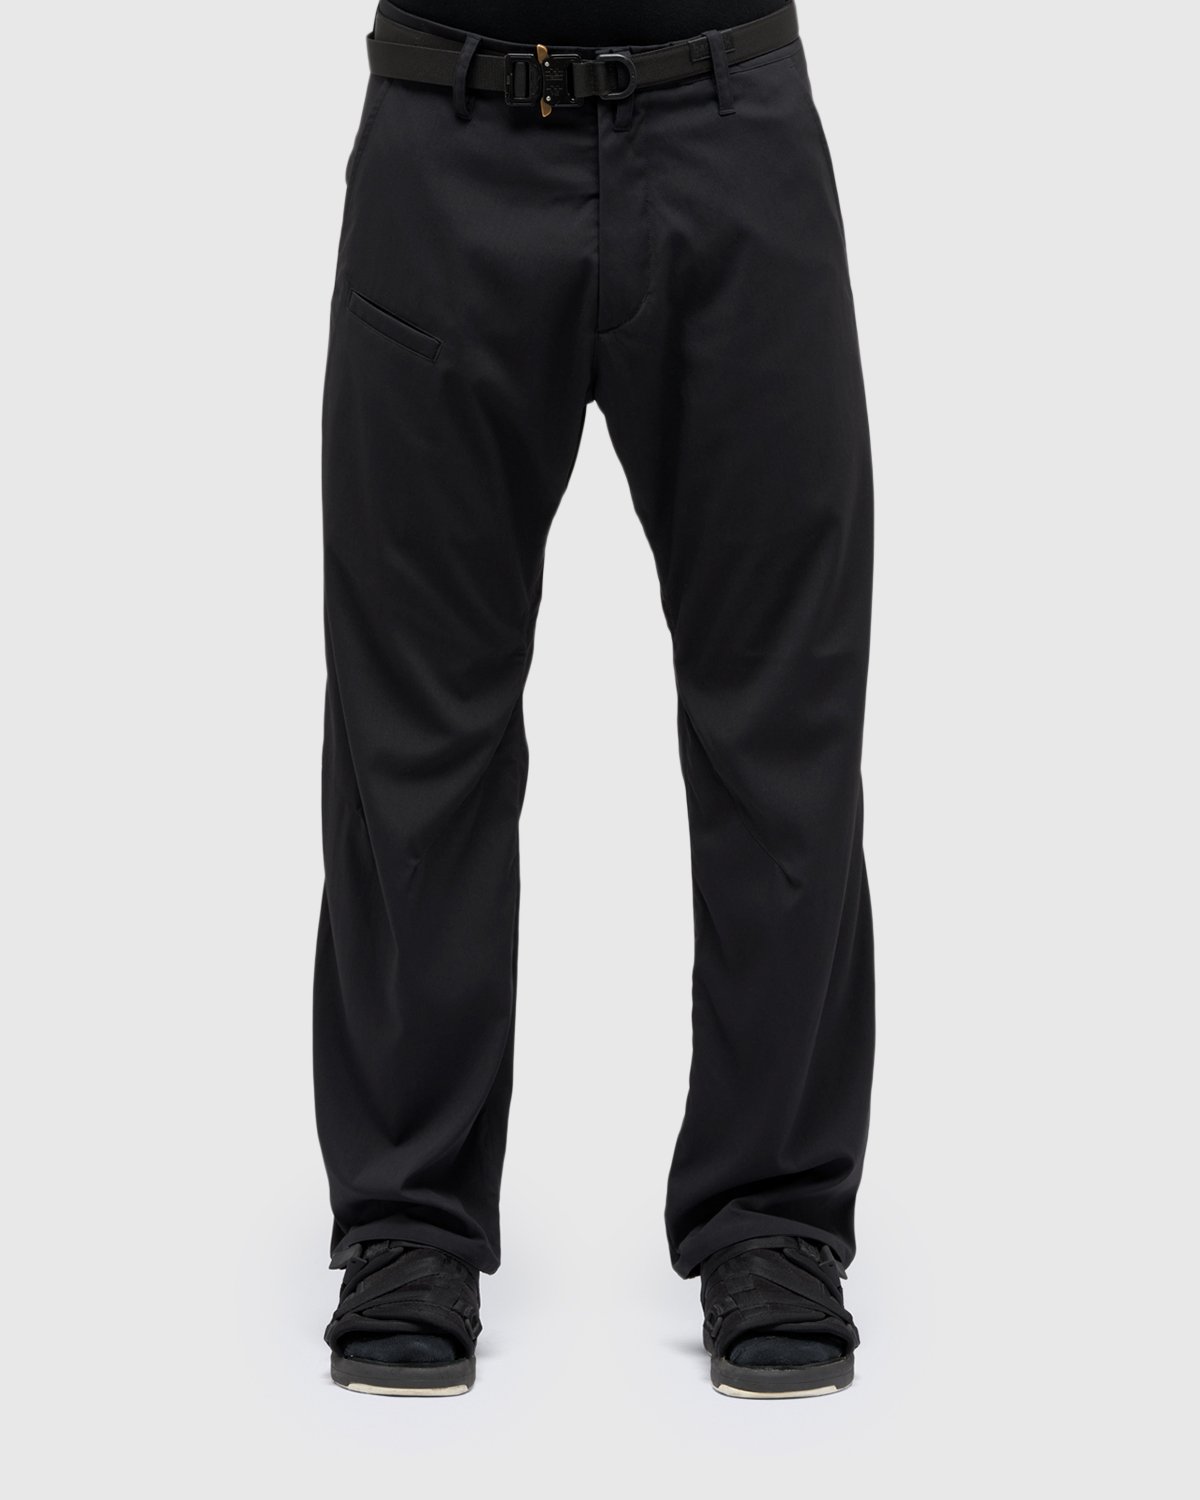 ACRONYM - P39-M Pants Black - Clothing - Black - Image 3